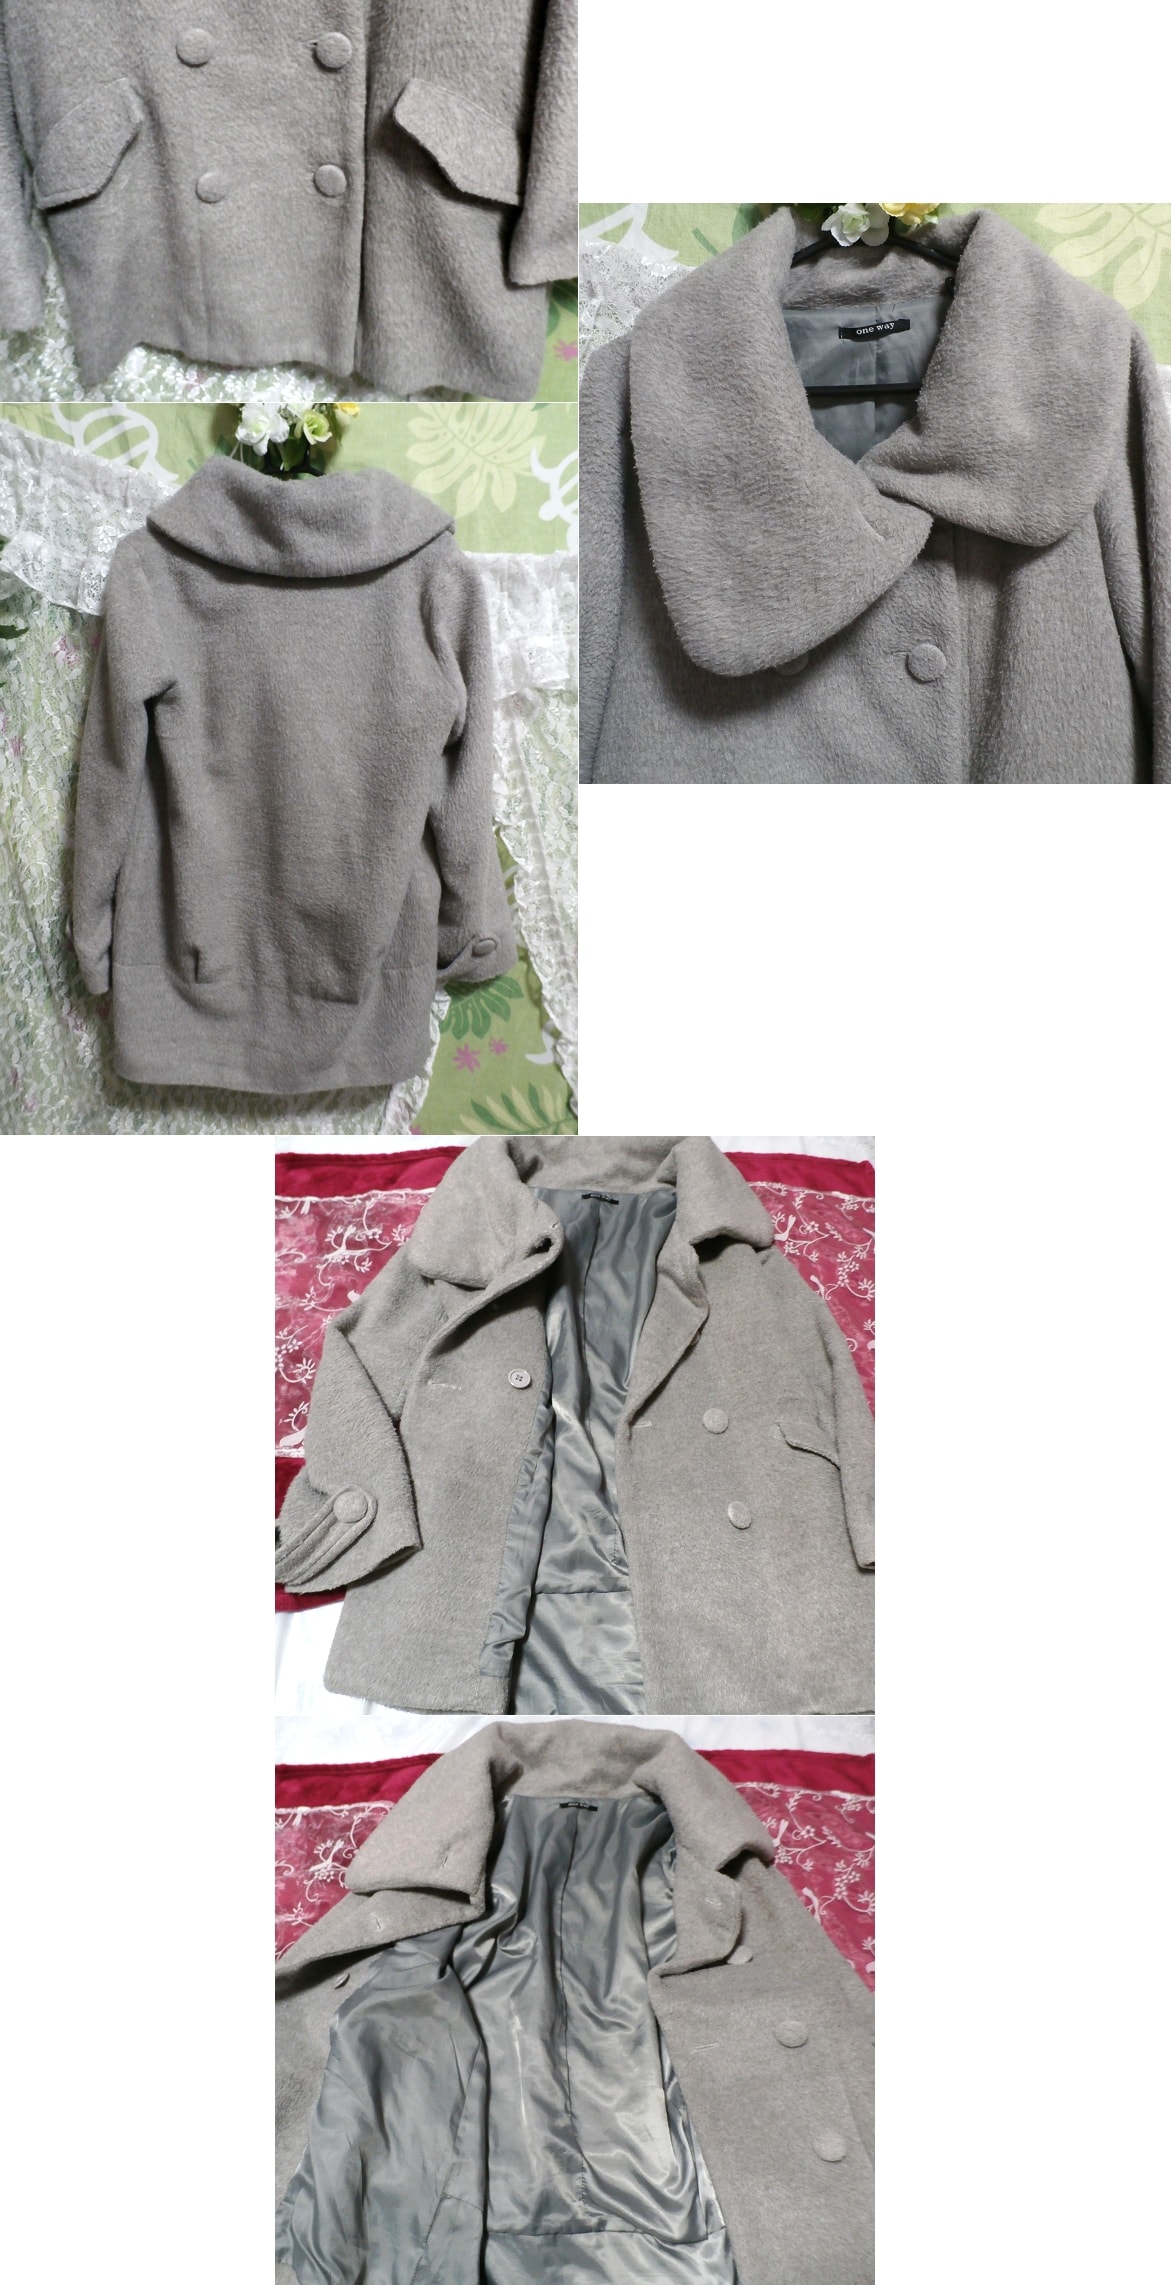 Linda capa larga gris femenina, abrigo, abrigo en general, talla m